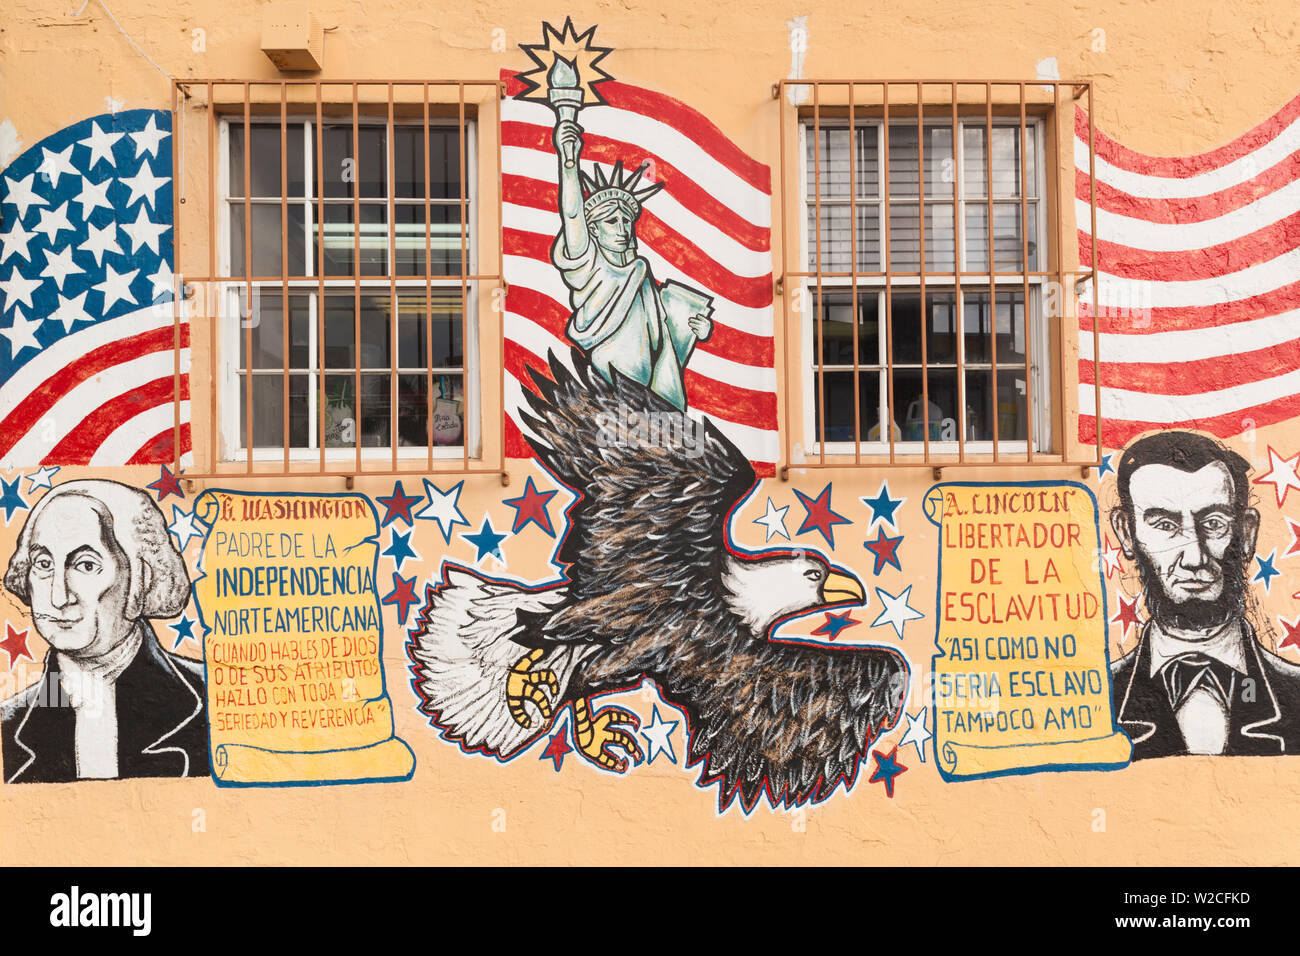 USA, Florida, Miami, Little Havana, Calle Ocho, SW 8th Street, wall mural avec George Washington et Abraham Lincoln Banque D'Images